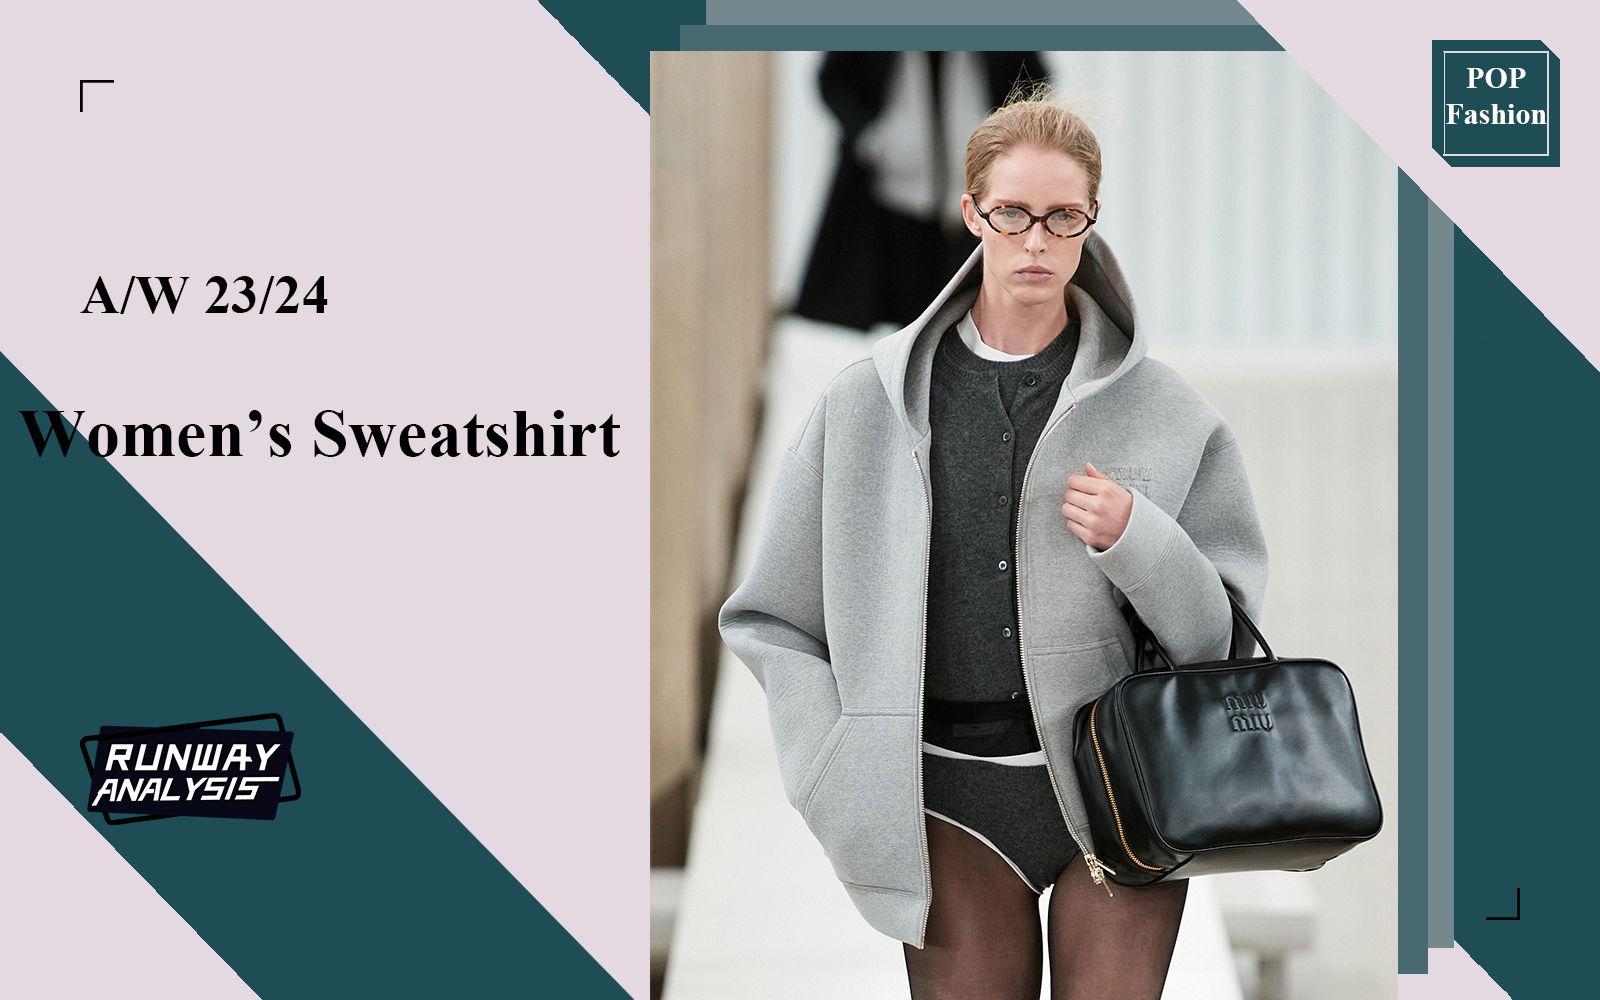 A/W 23/24 Women's Runway Analysis of Sweatshirt